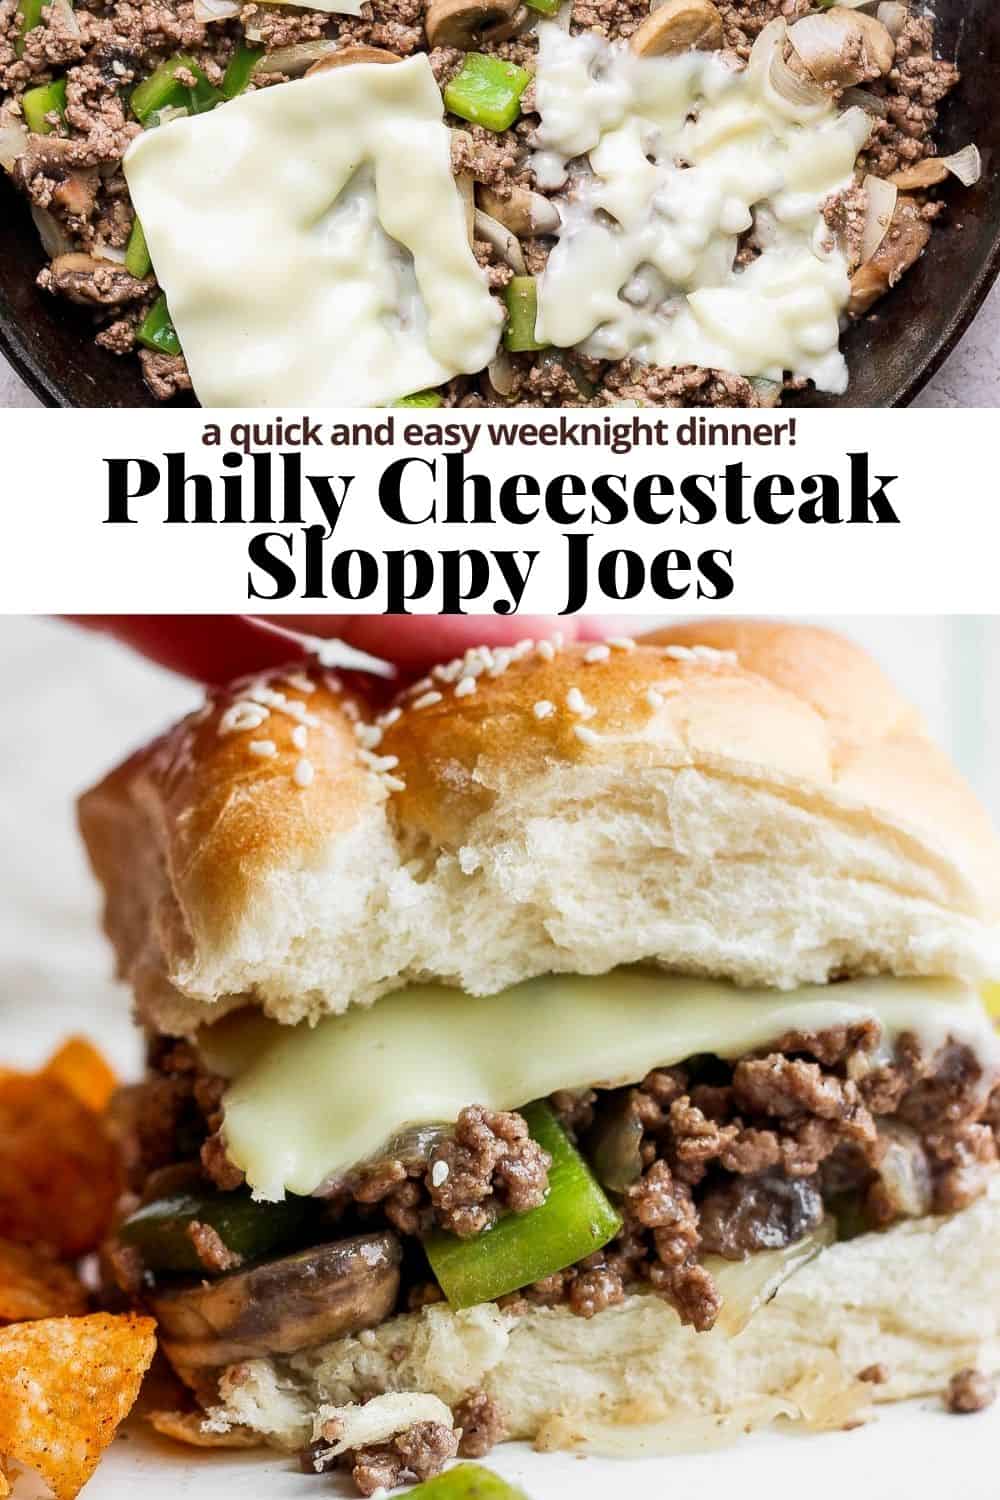 Pinterest image for philly cheesesteak sloppy joes.